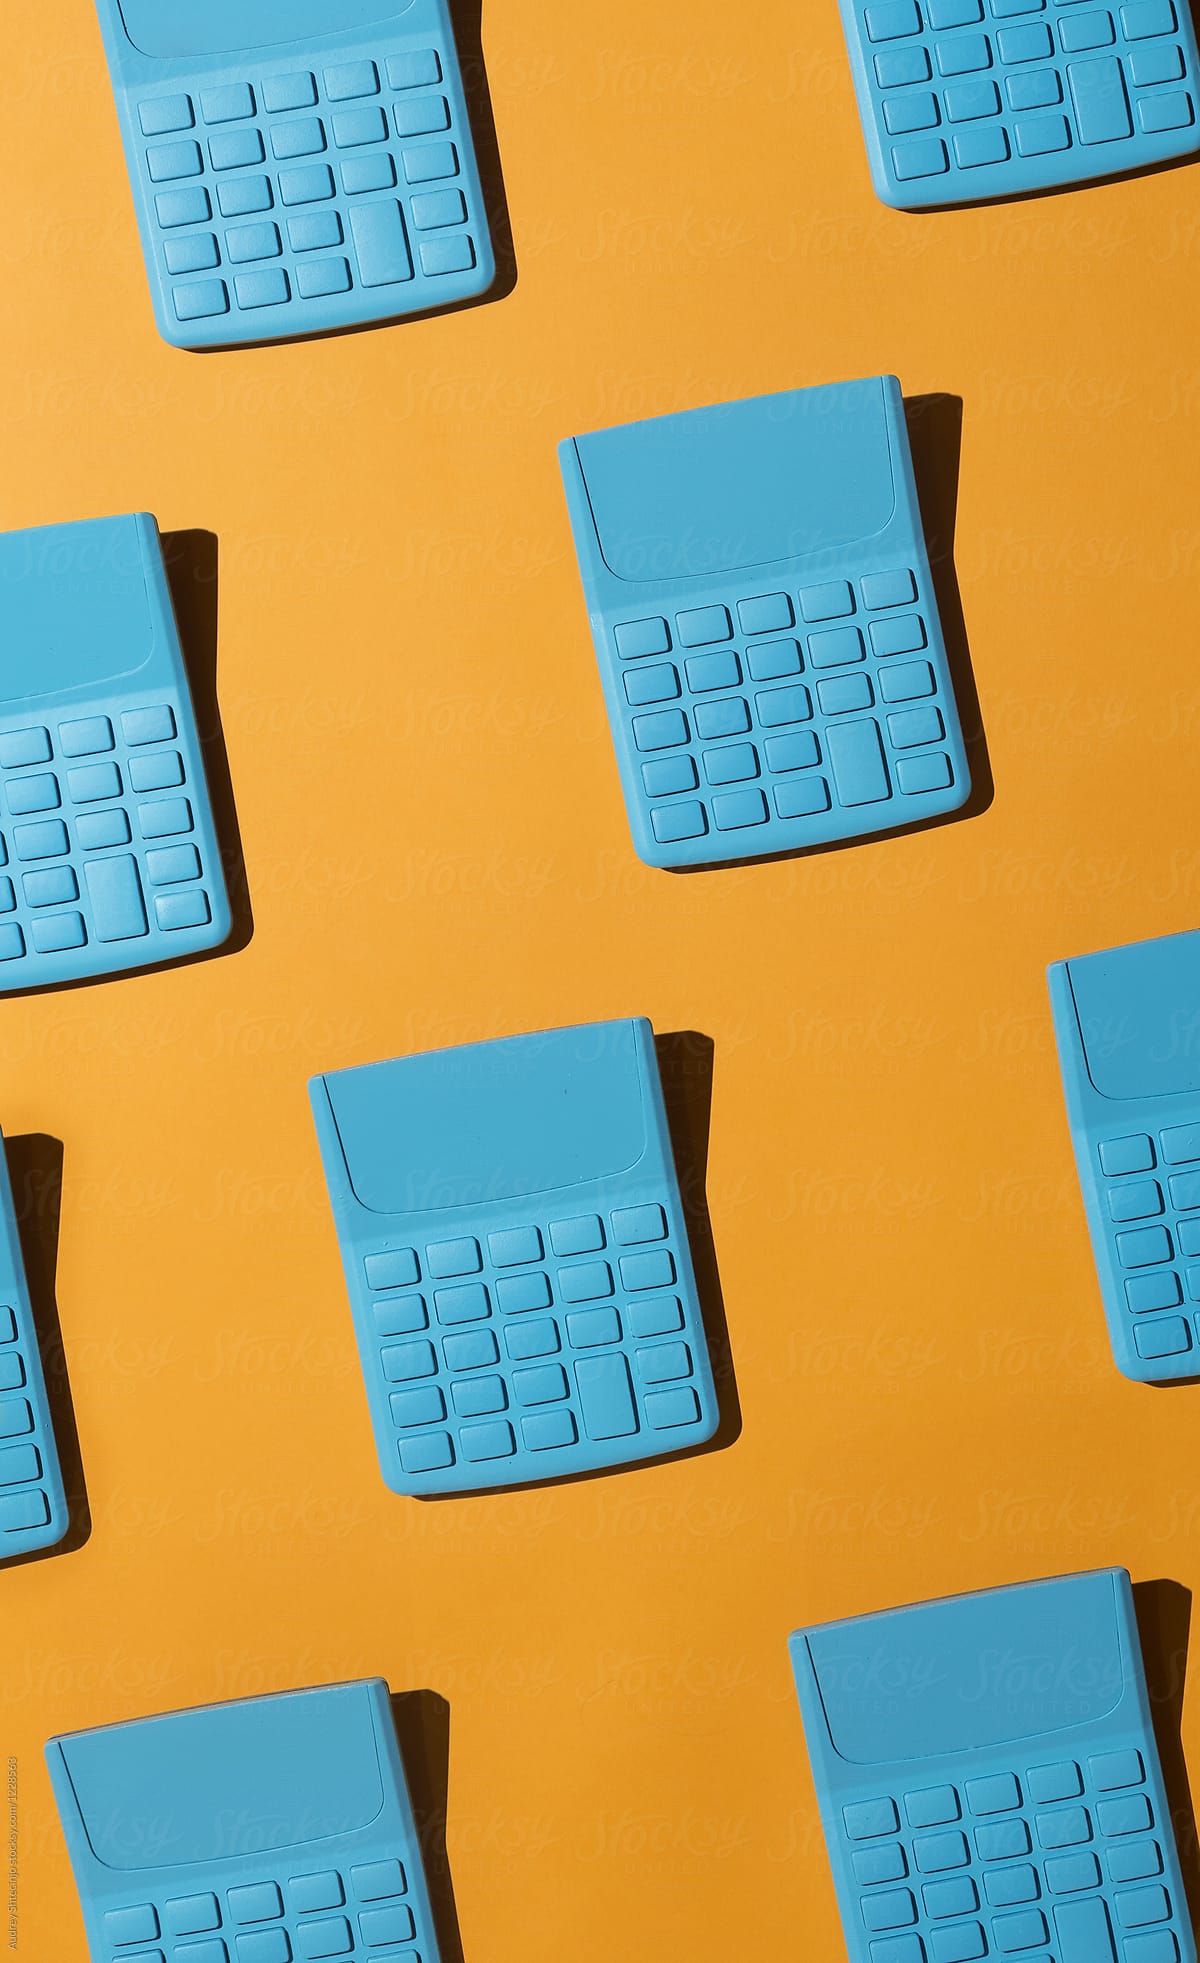 Blue pocket calculators on orange background.